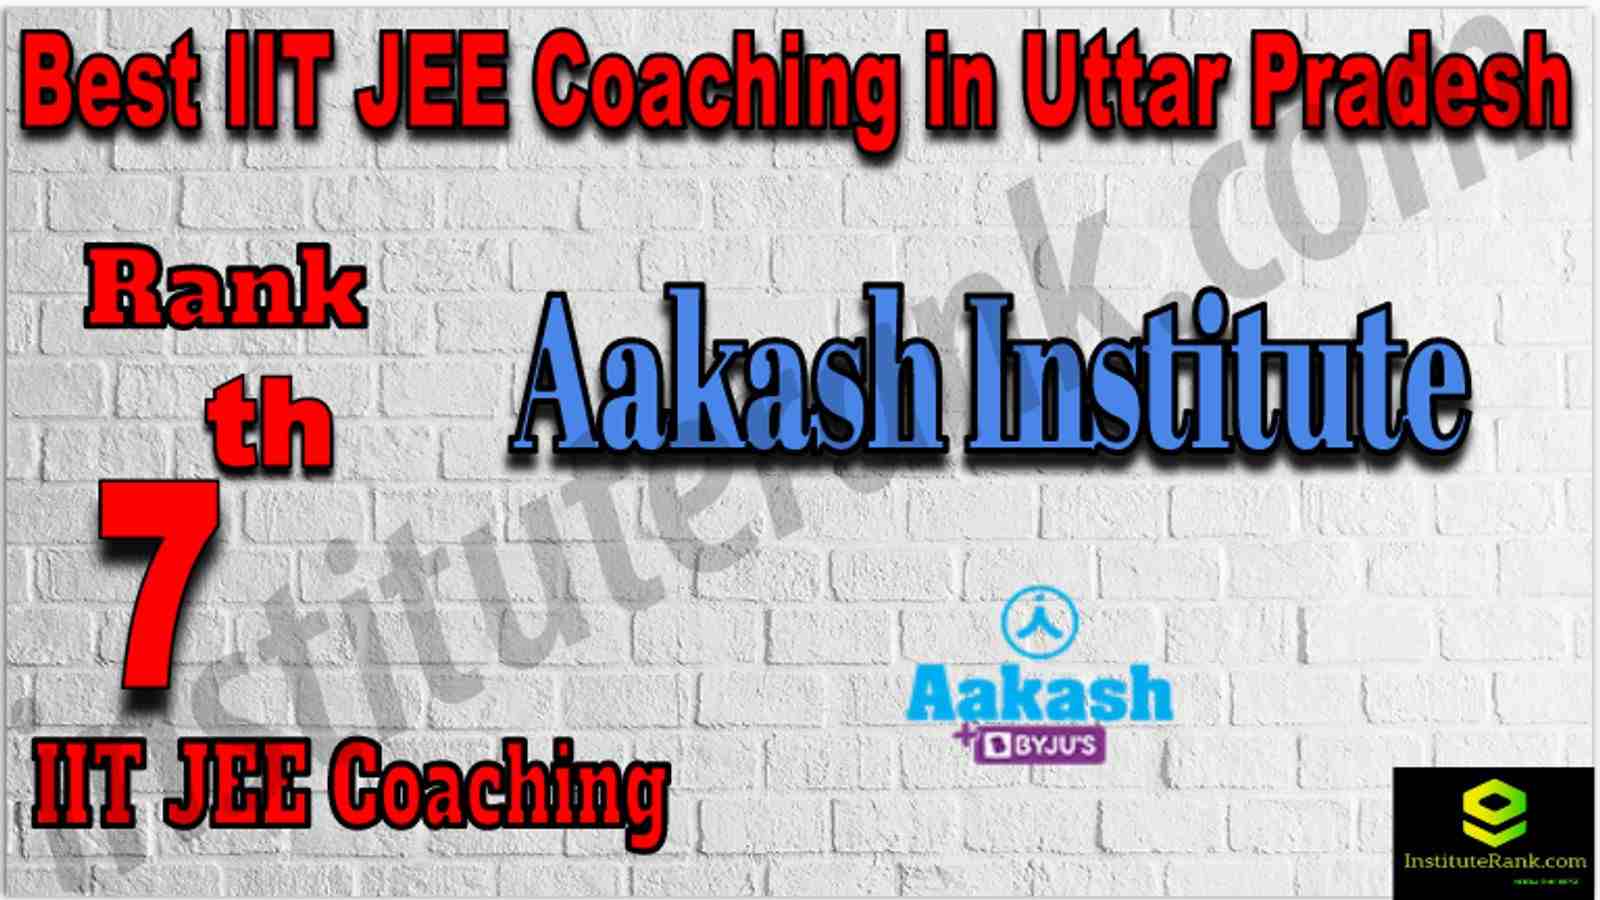 Rank 7th Best IIT JEE Coaching in Uttar Pradesh